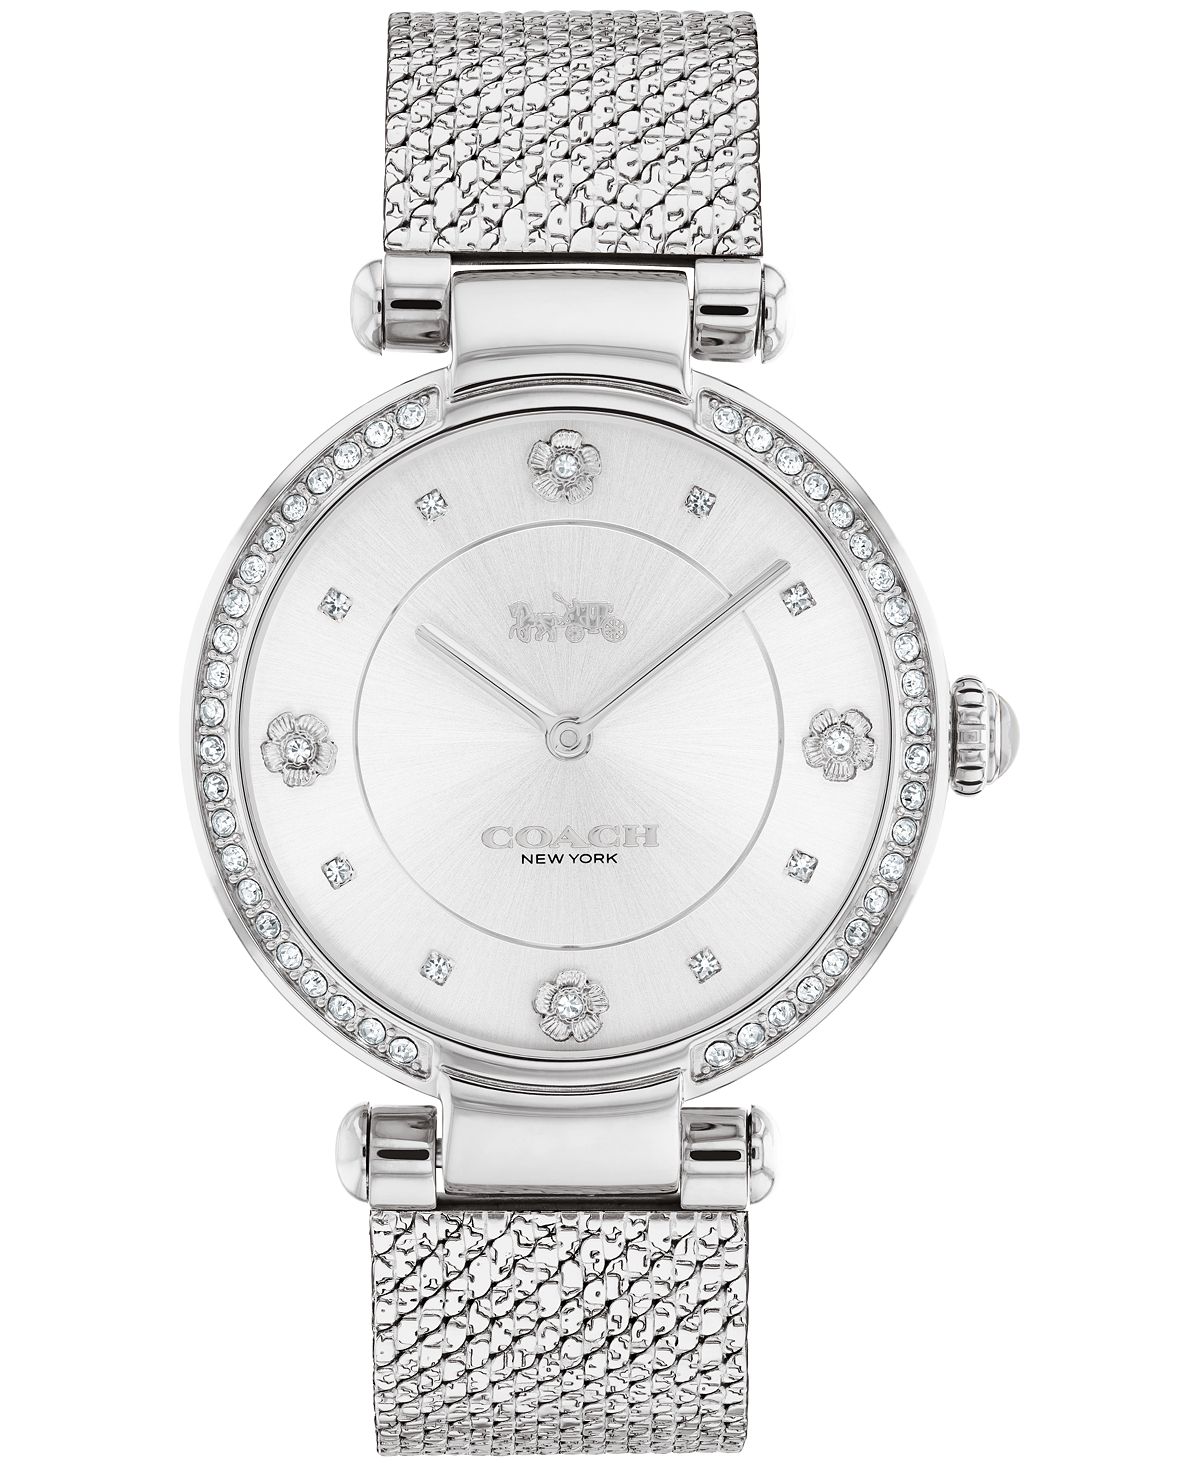 Женские часы Cary серебристого цвета с сетчатым браслетом из нержавеющей стали, 34 мм COACH brushed stainless steel 3d channel letter